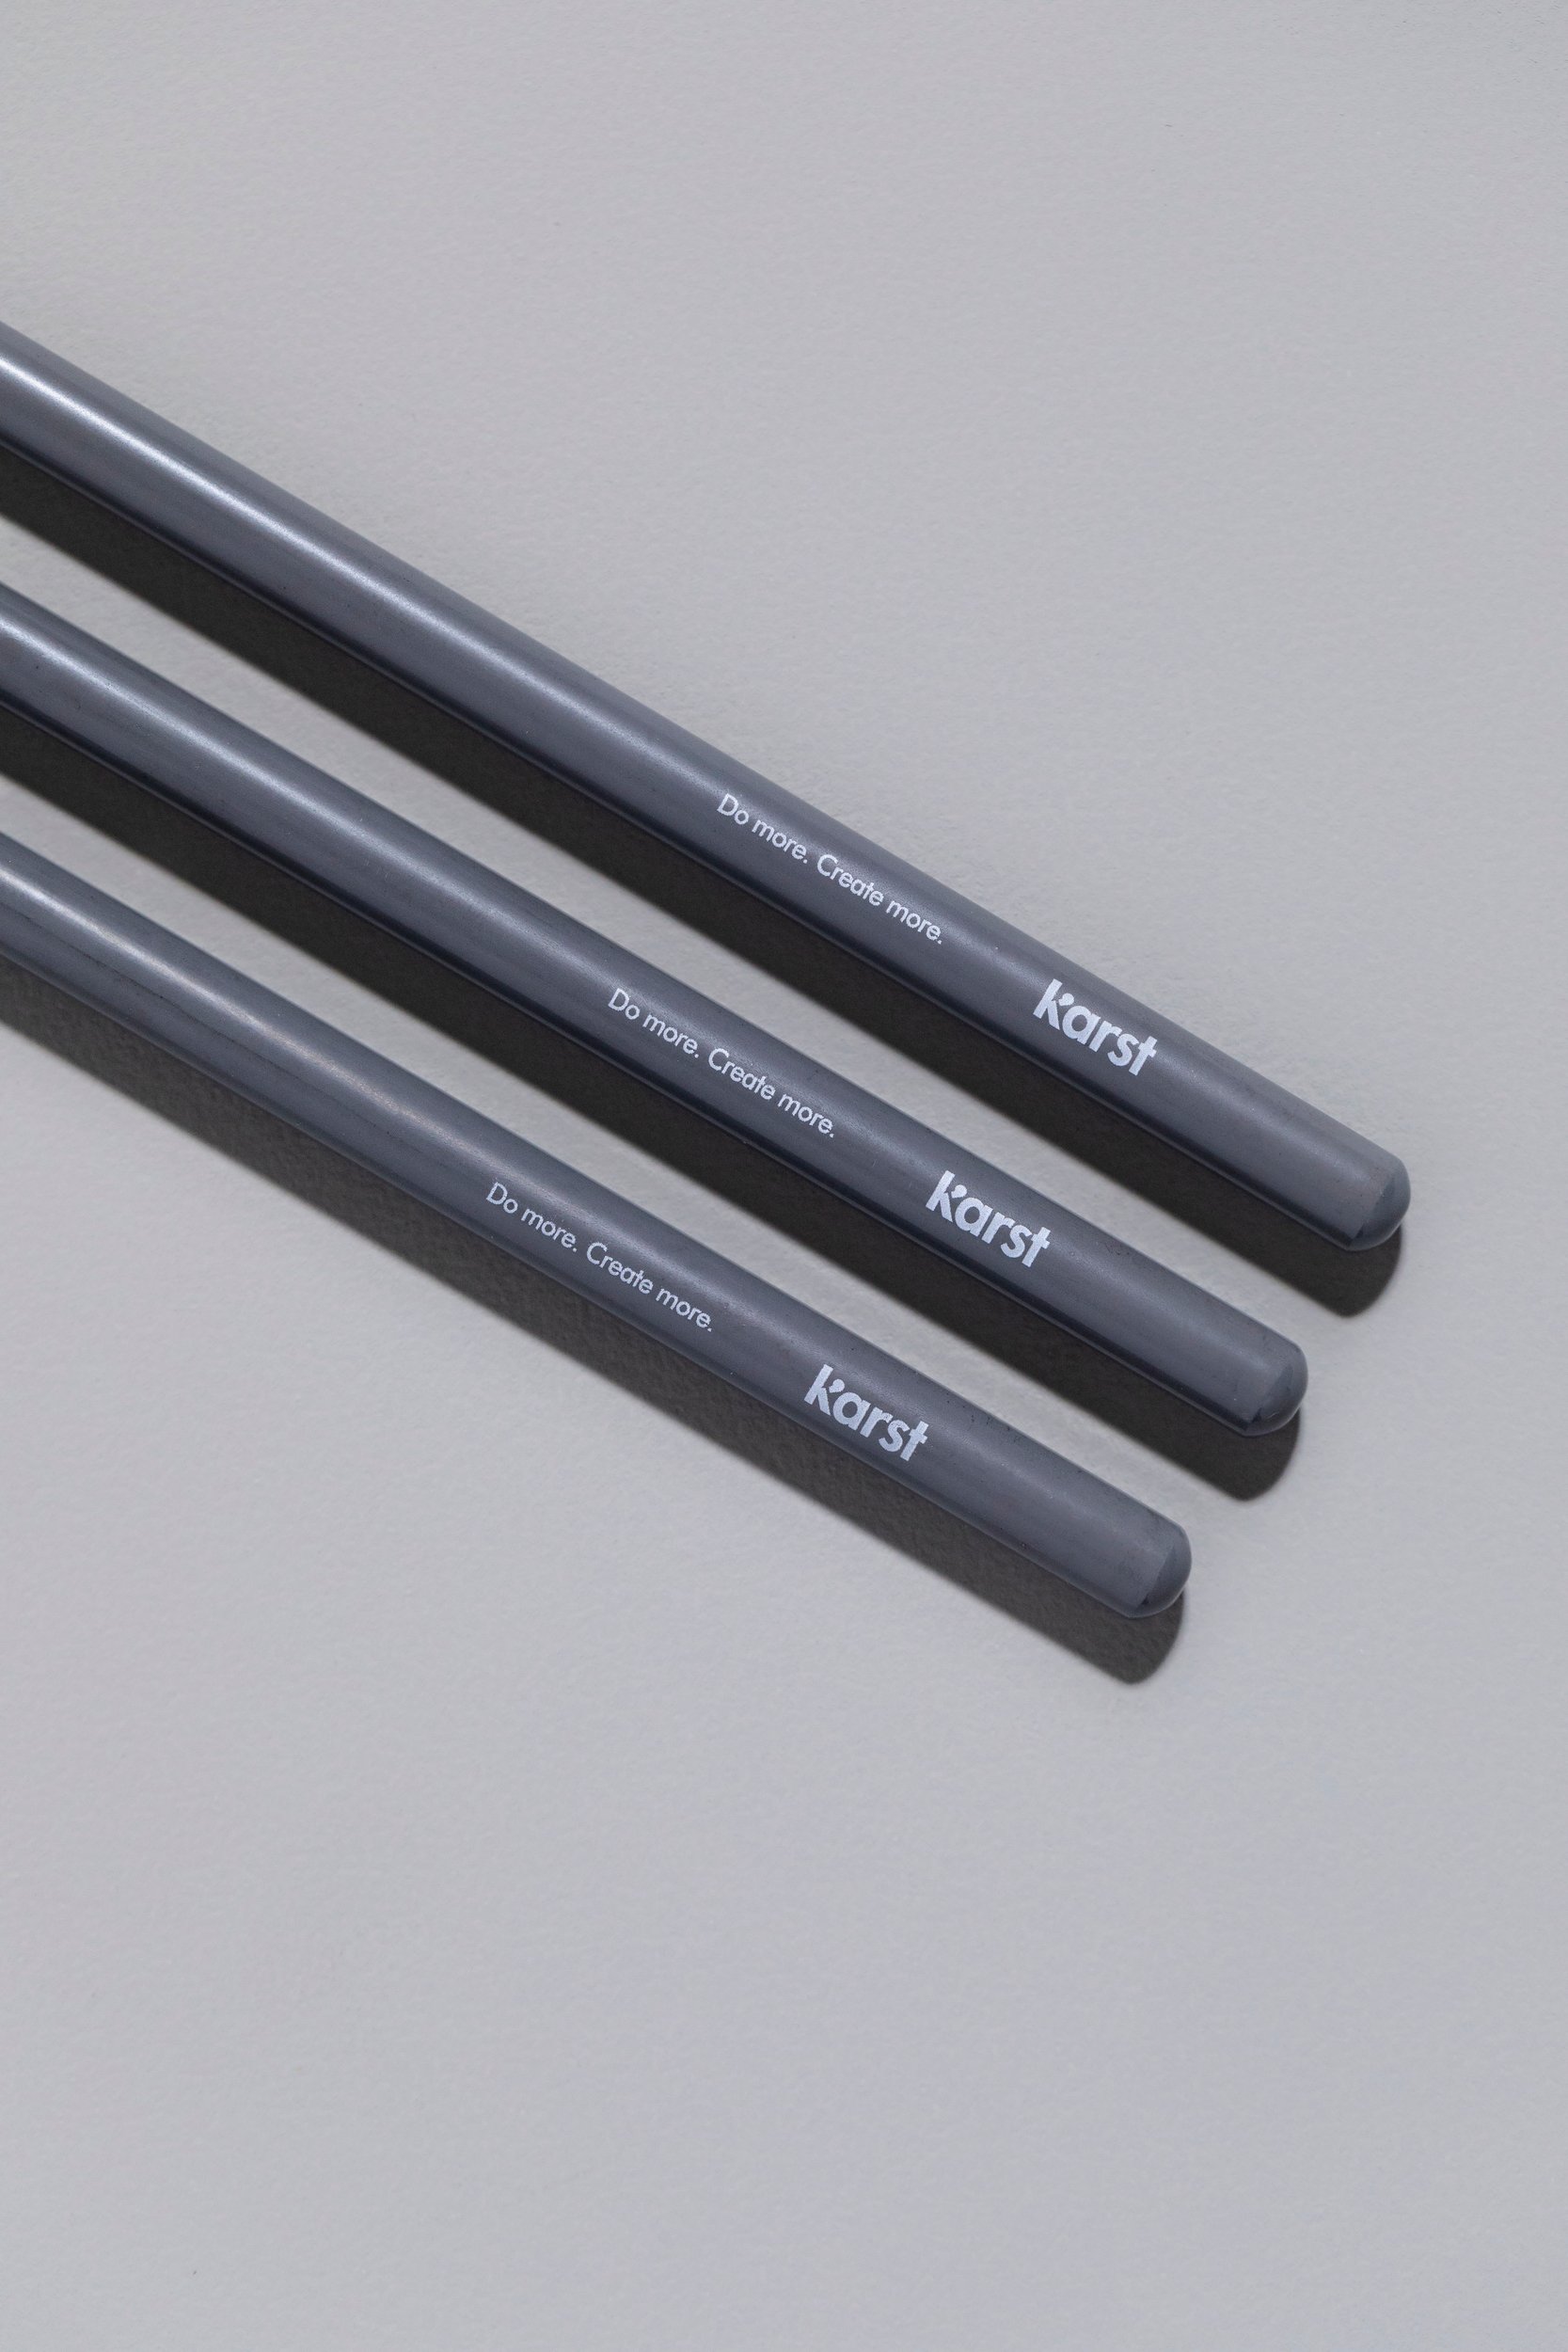 Karst Goods  Woodless Artist Pencils